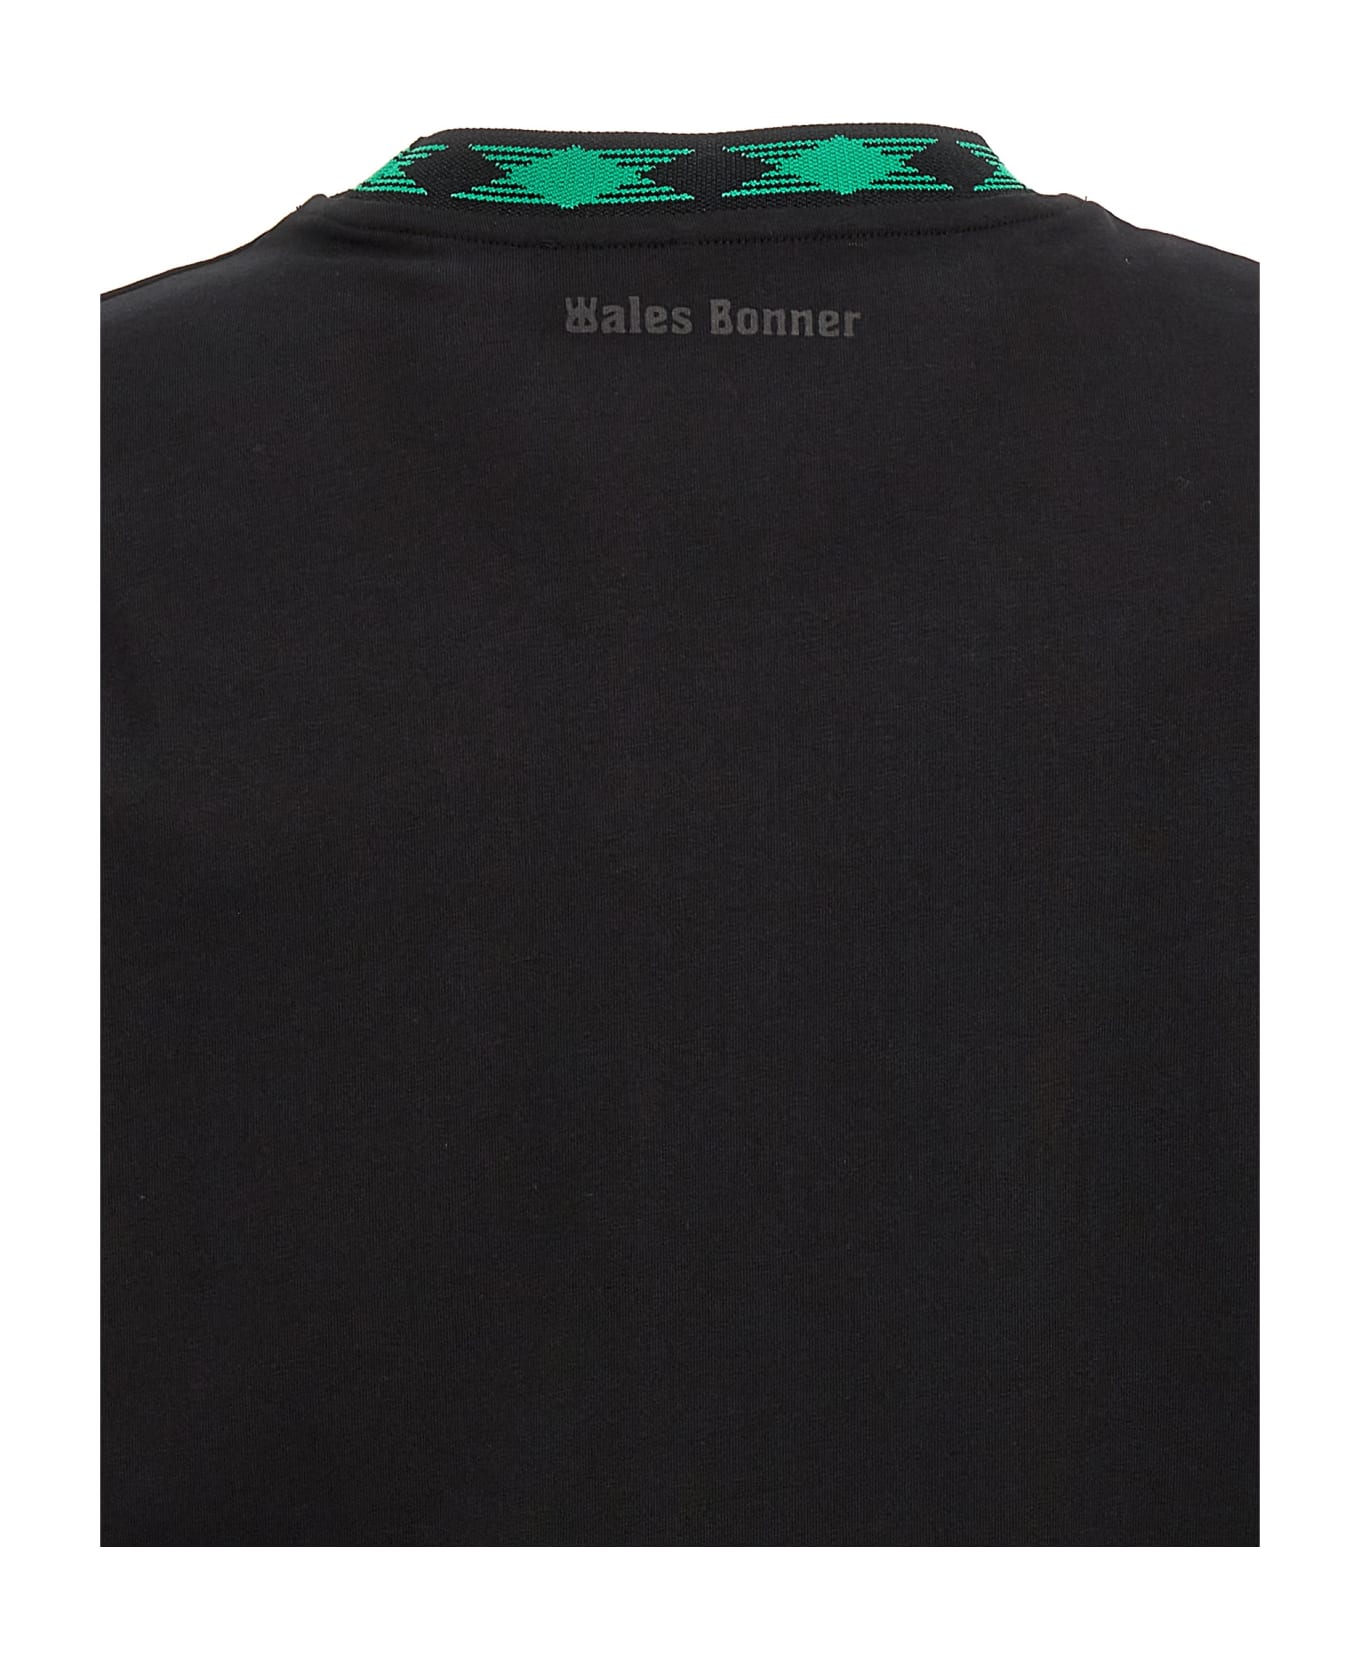 Wales Bonner 'original' T-shirt - Black   シャツ